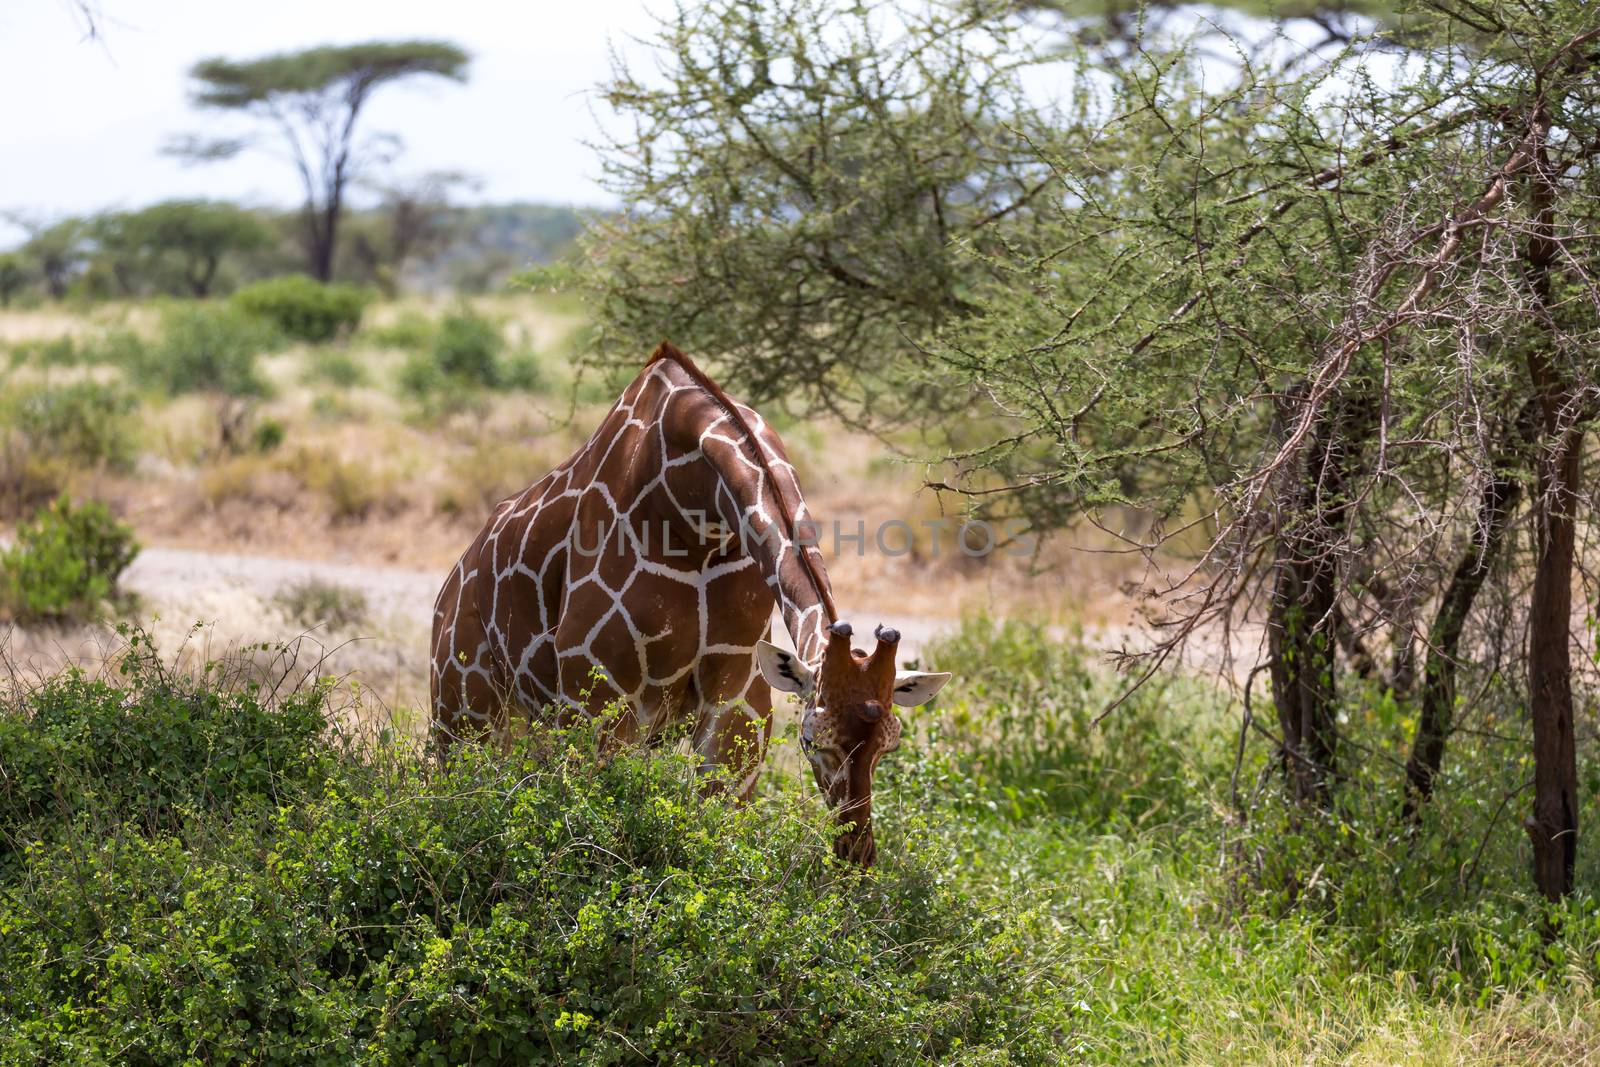 A giraffe eats the leaves of a bush by 25ehaag6